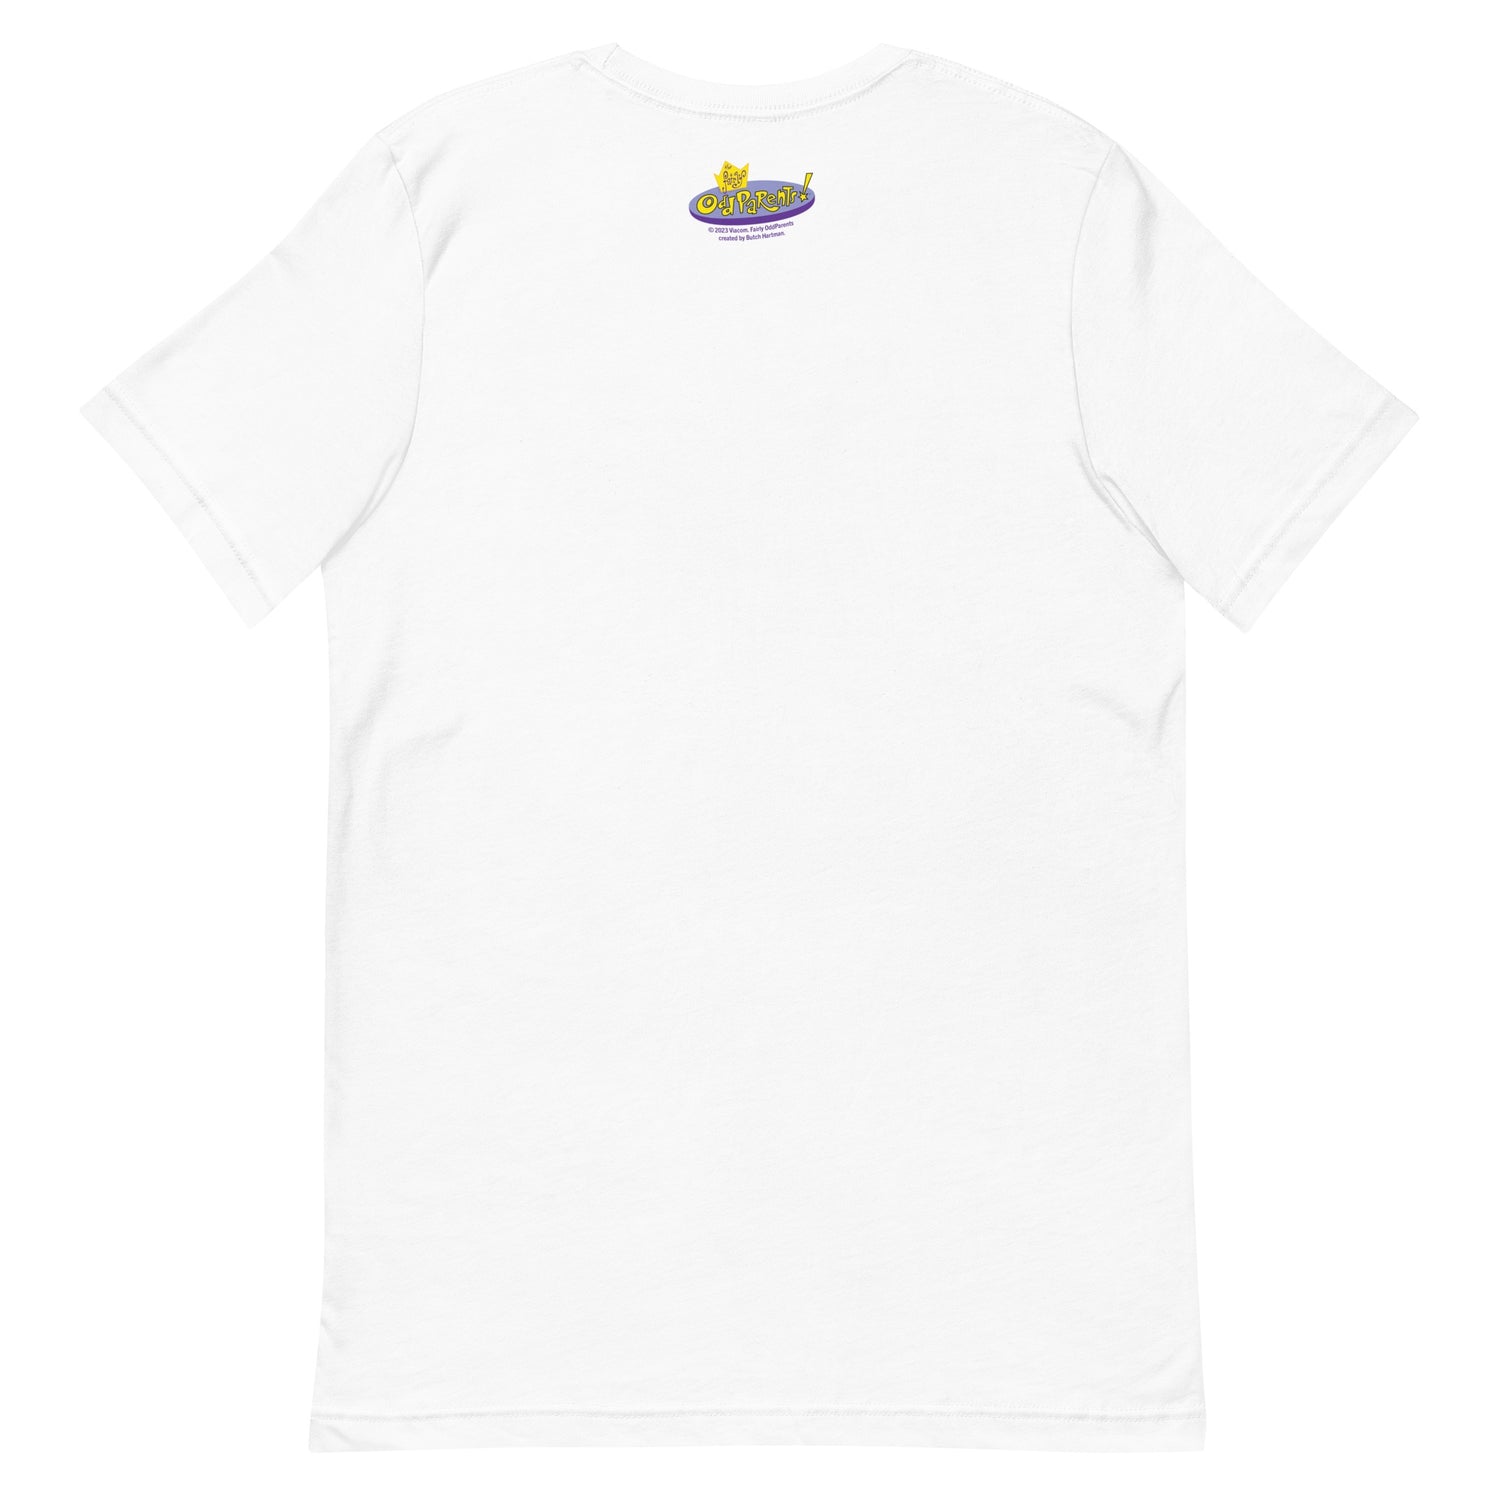 The Fairly OddParents Wanda Unisex Adult Short Sleeve T-Shirt